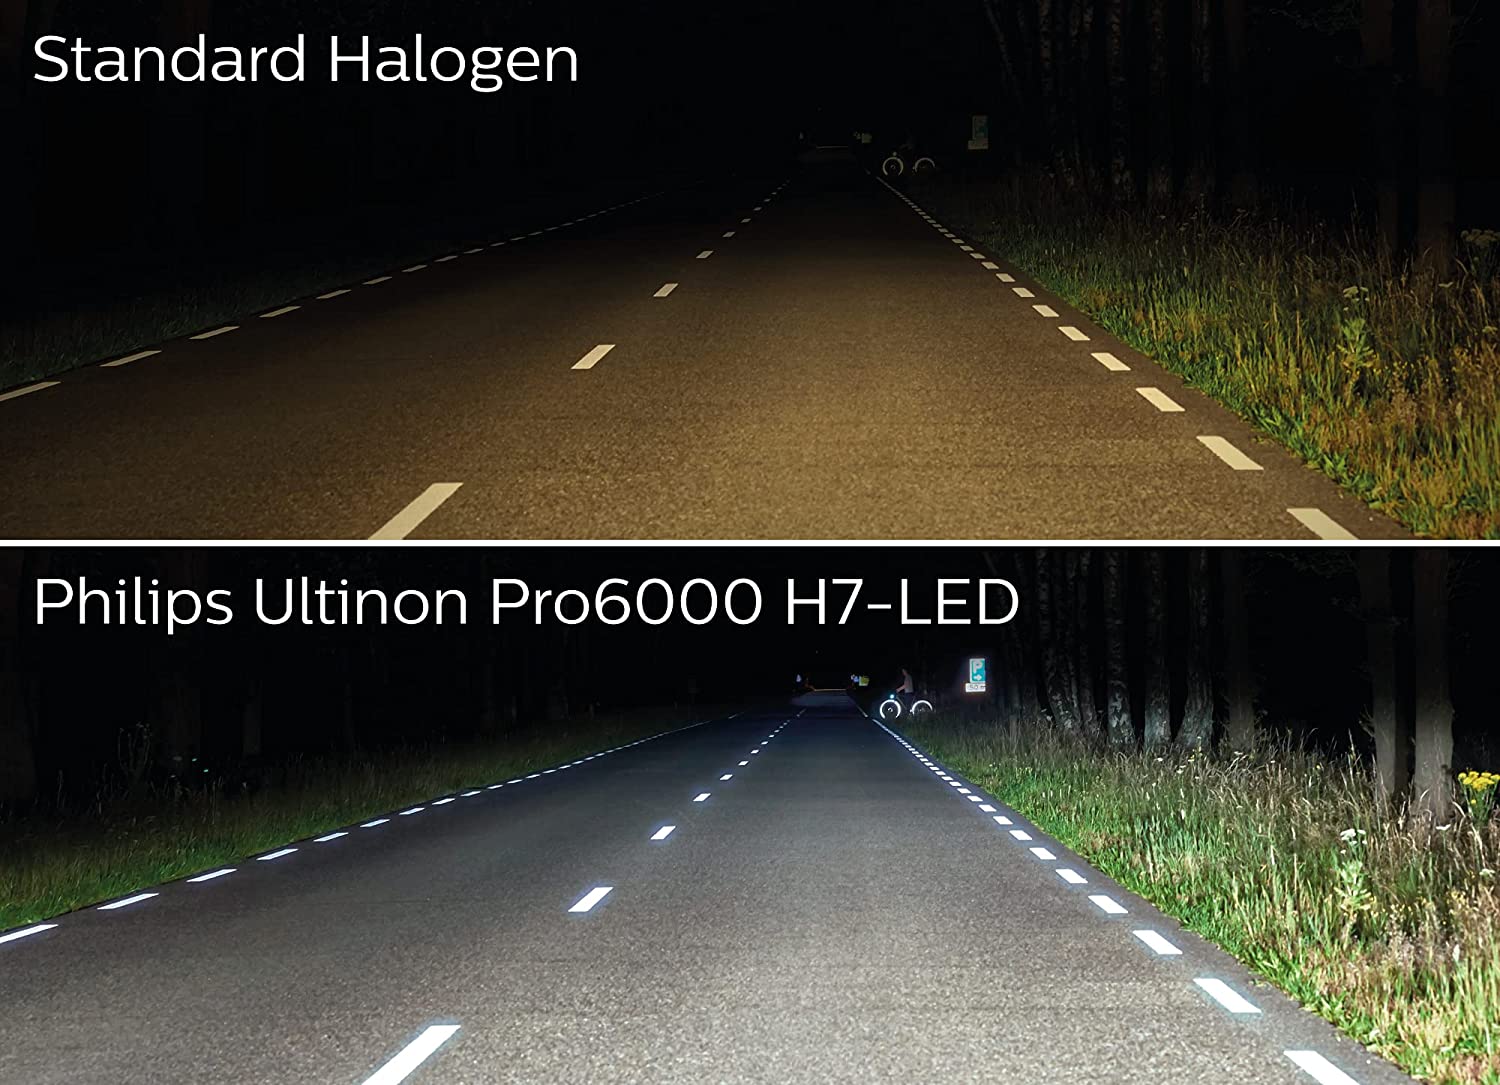 Daylights Austria - Philips C5W 43mm LED Ultinon Pro6000 SI 4000K Soffitte